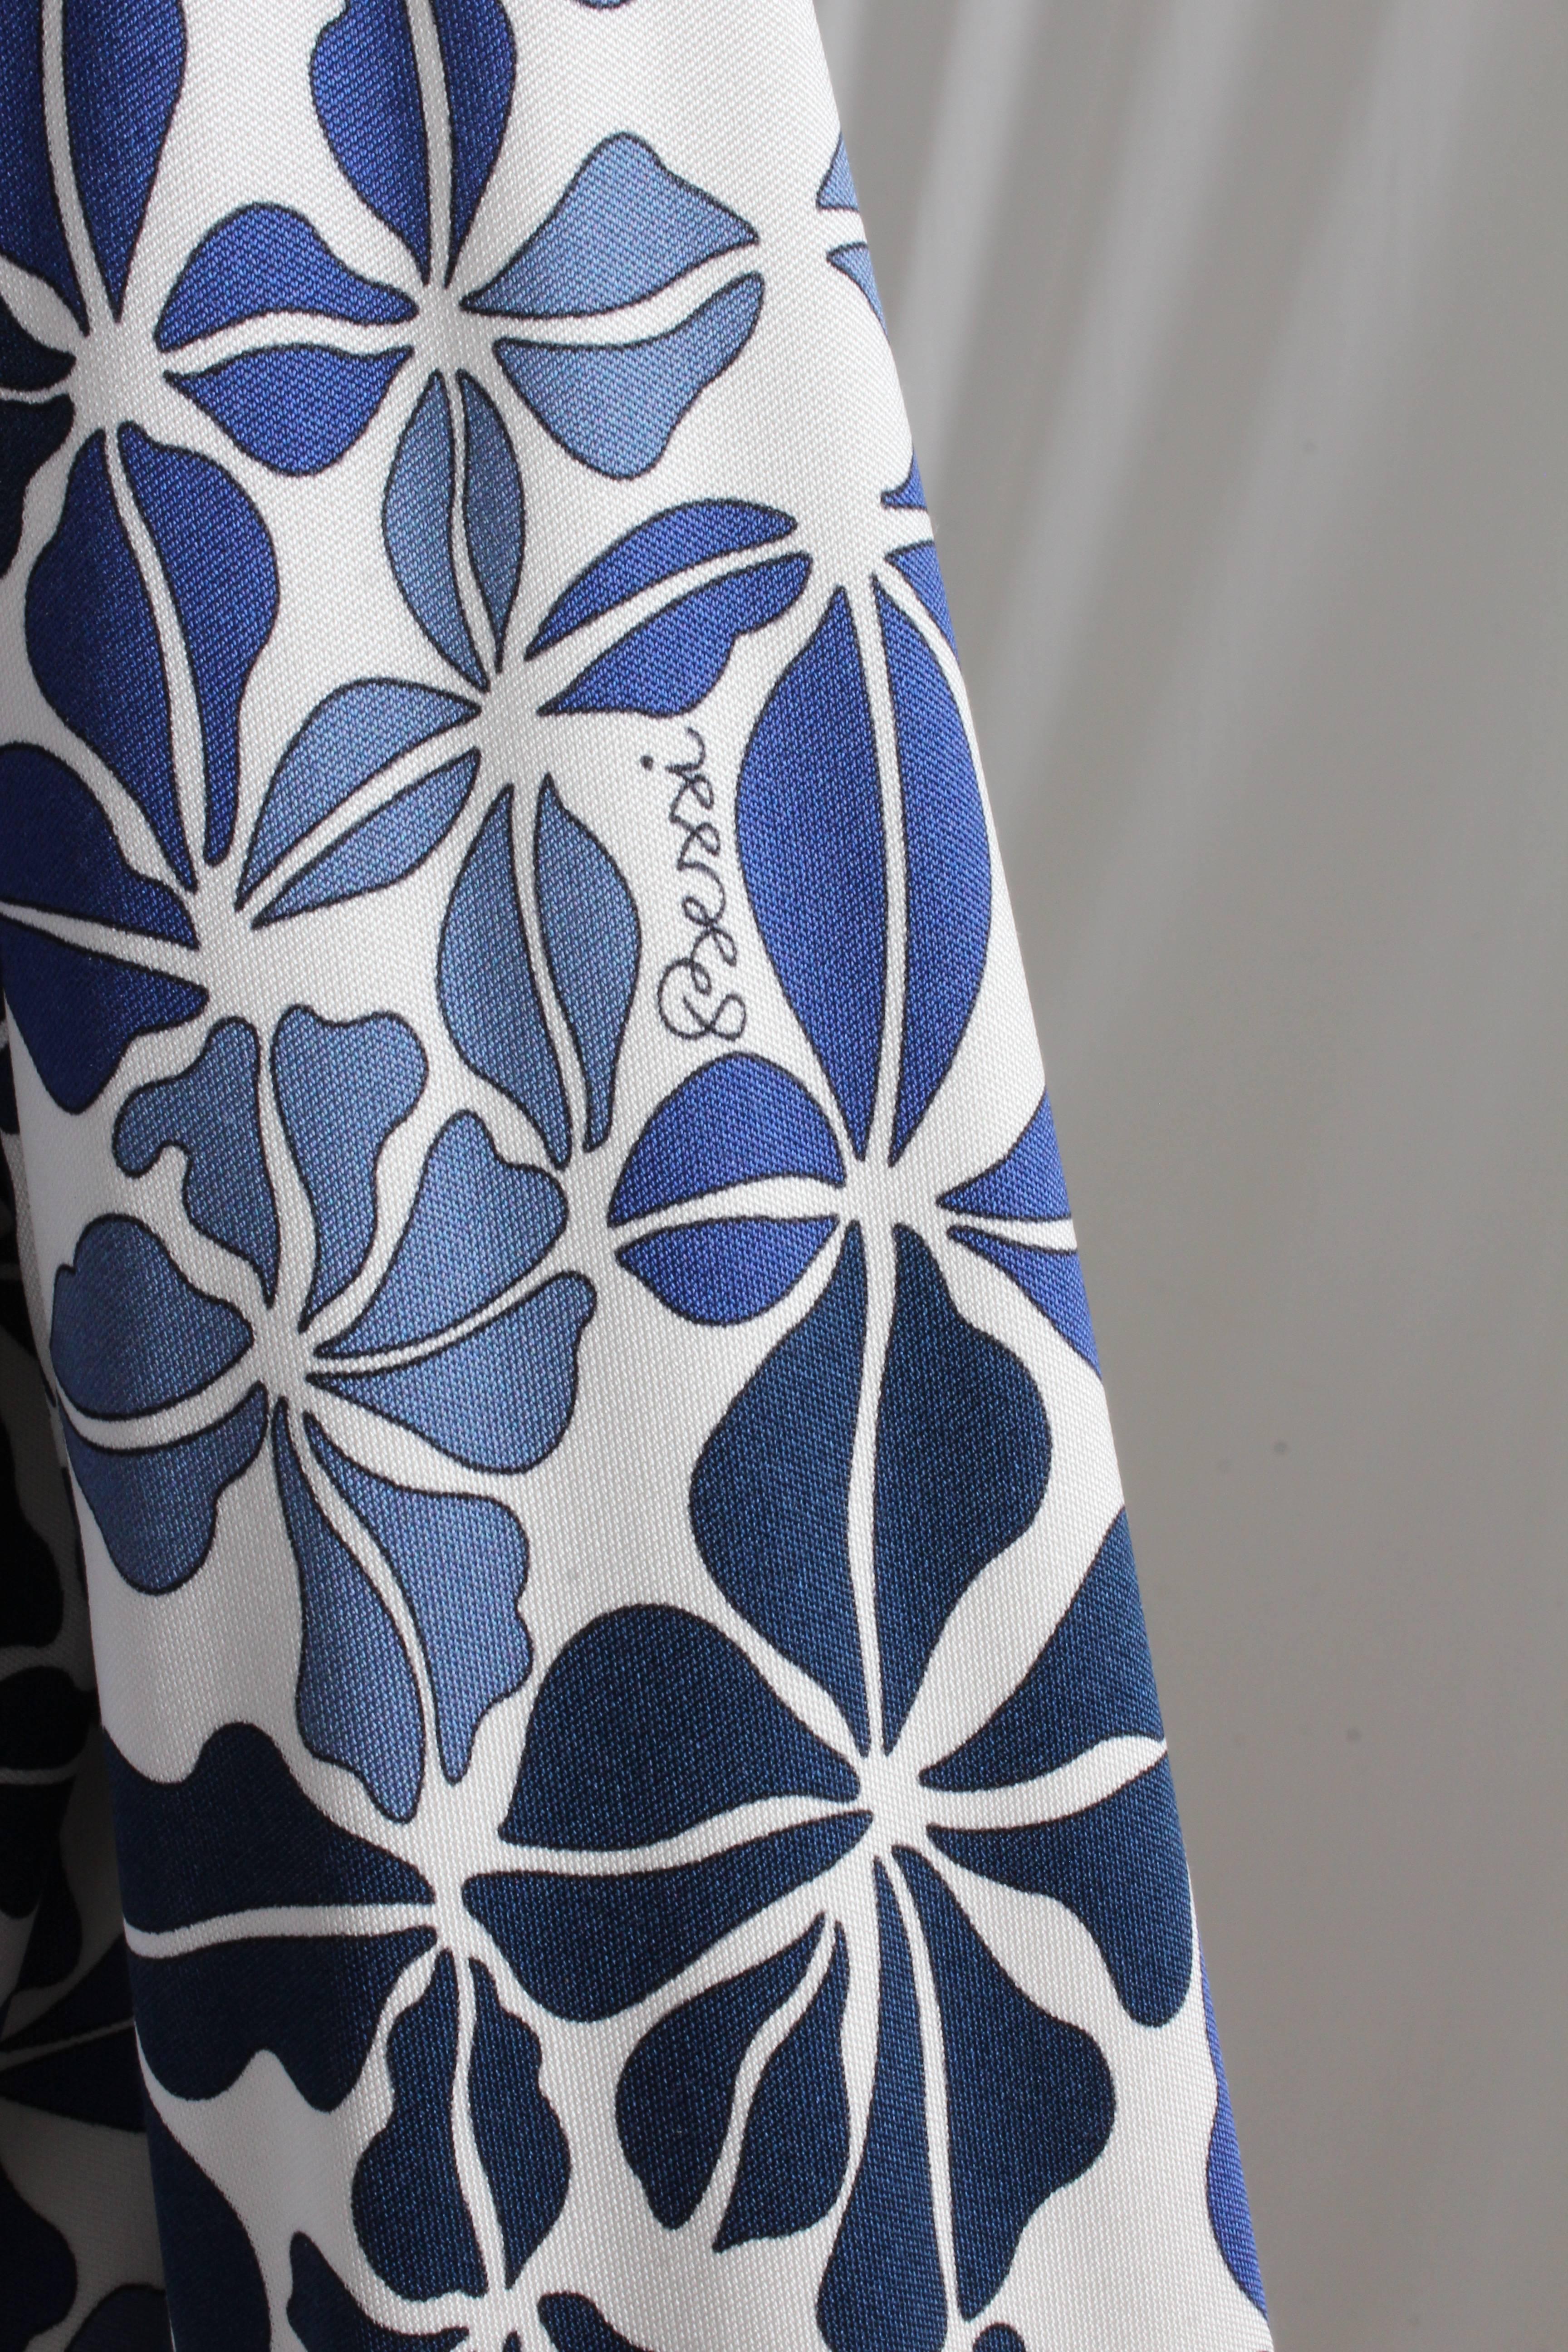 Averardo Bessi Silk Jersey Graphic Floral Print Boatneck Dress   1